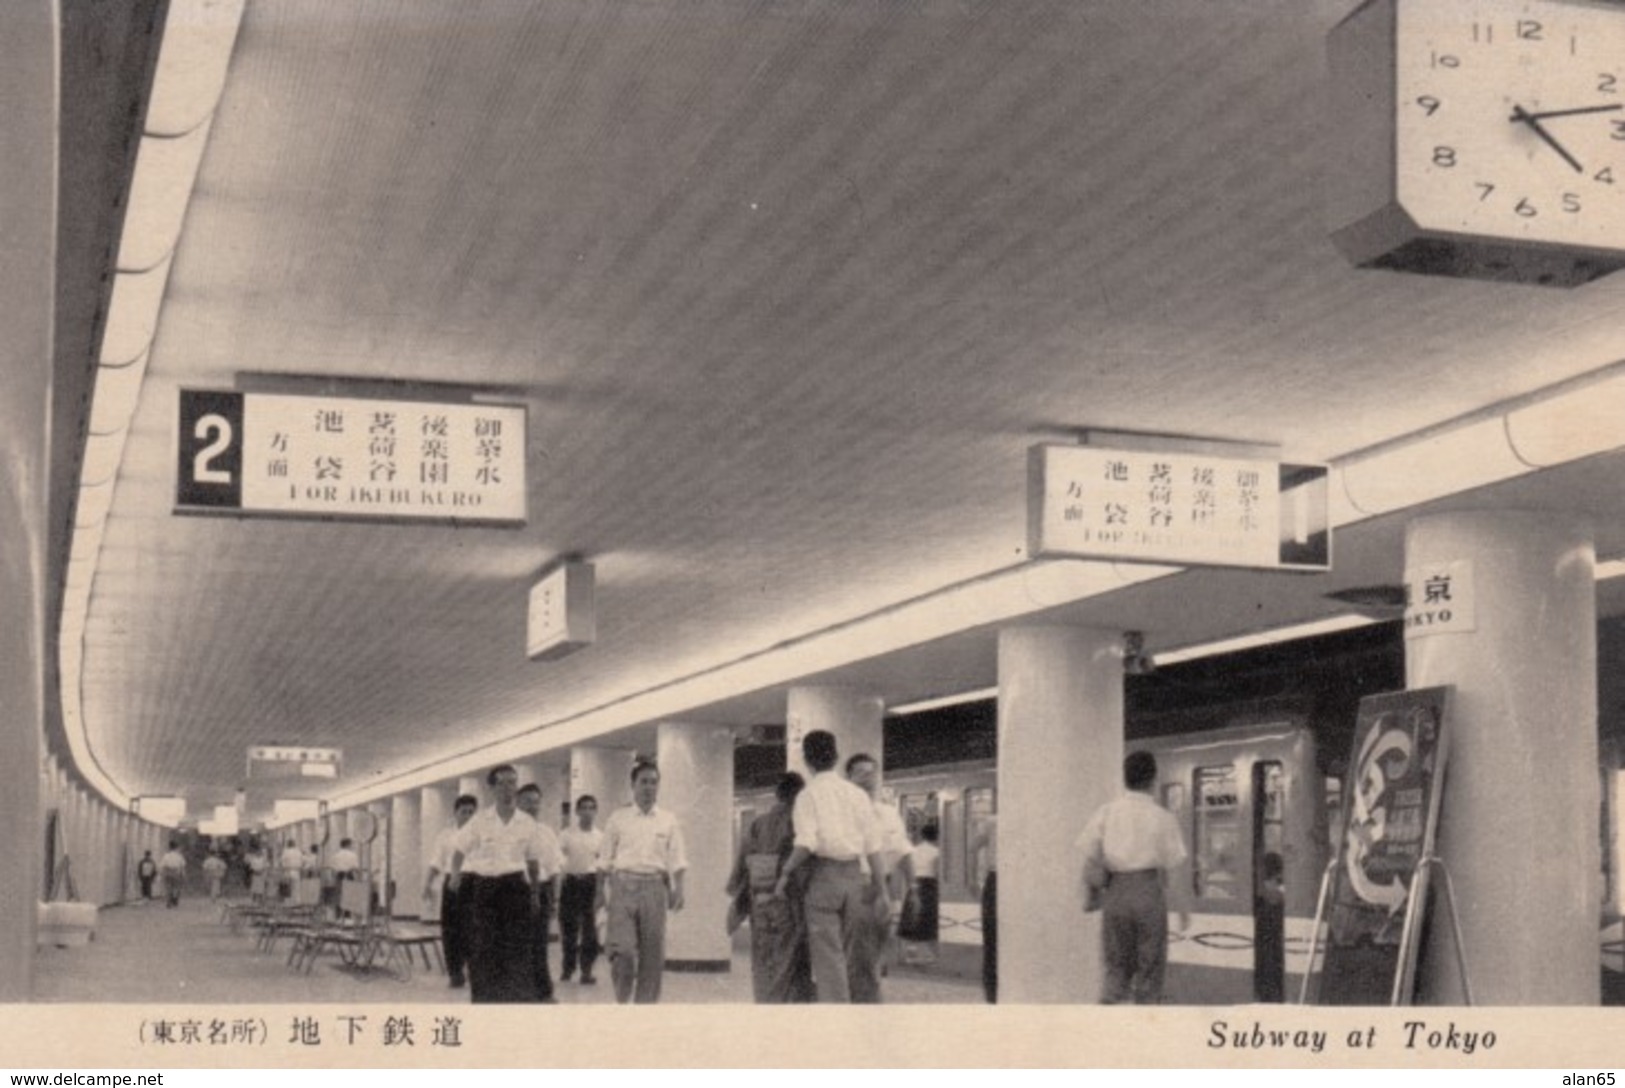 Tokyo Japan Subway System Platform 'For Ikebu Kuro' Sign, C1950s/60s Vintage Postcard - Subway